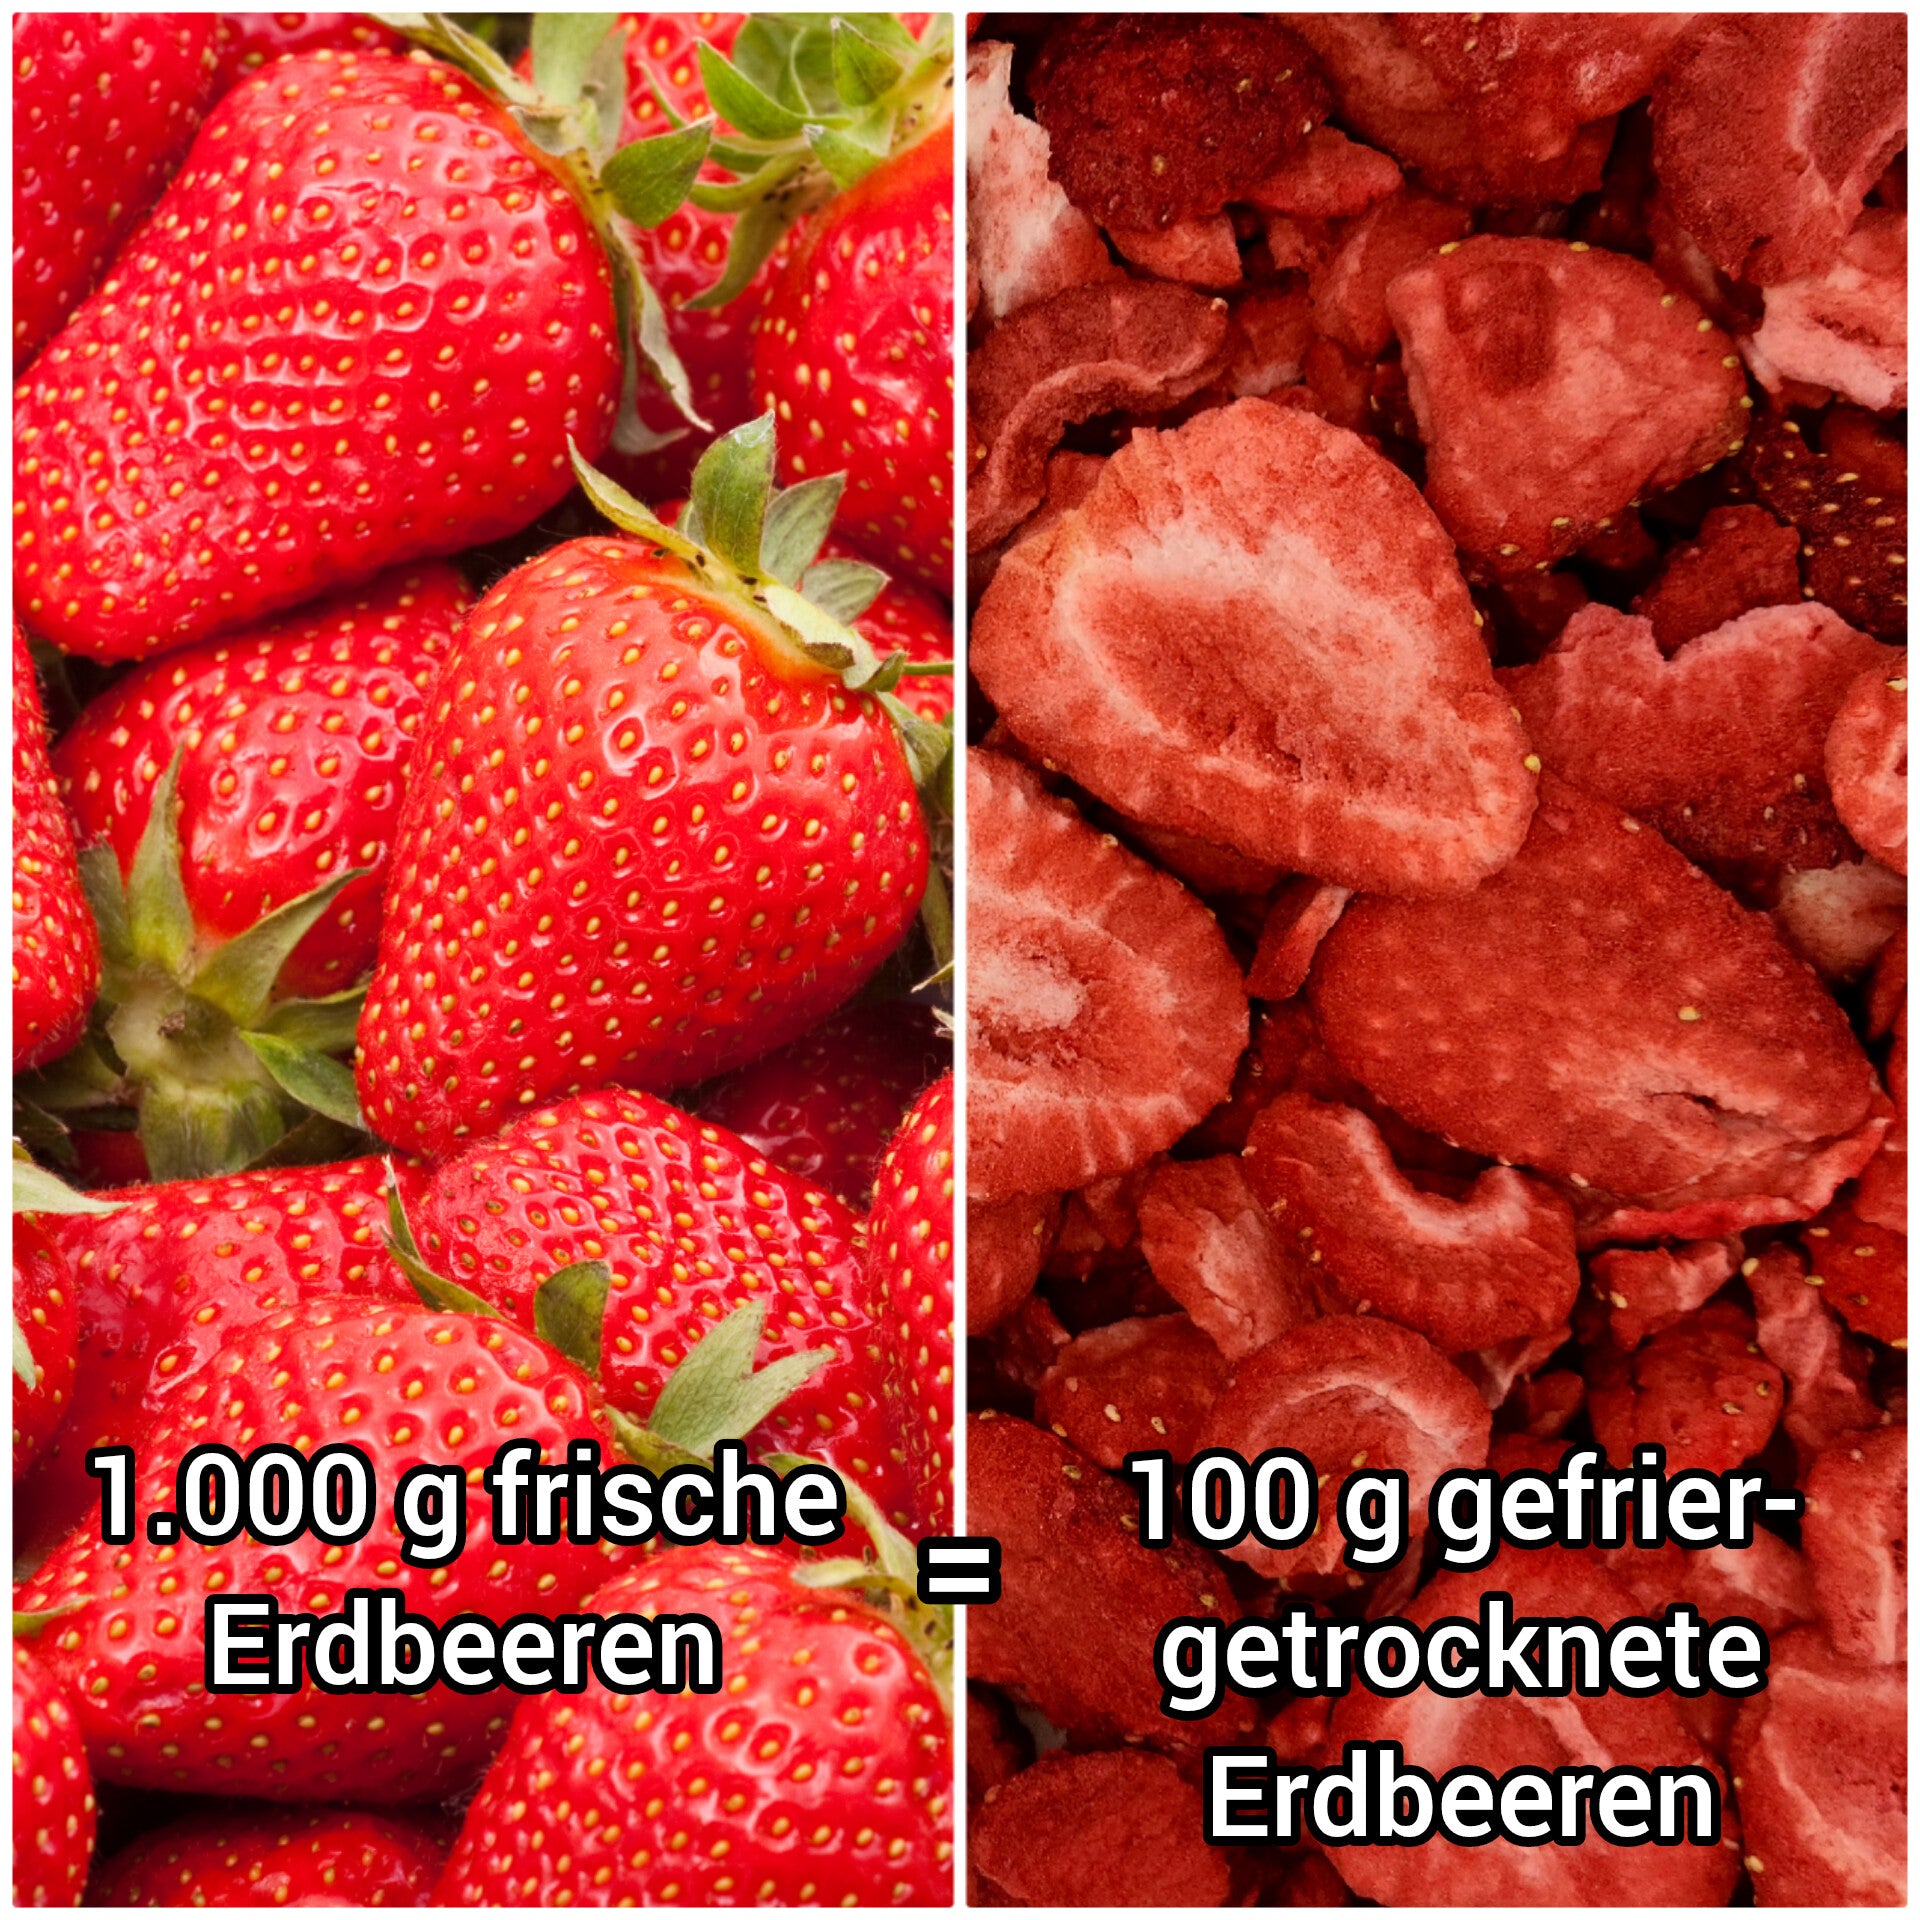 Aus 1000 g frische Erdbeeren werden 100 g gefriergetrocknete Shapefuel Erdbeeren